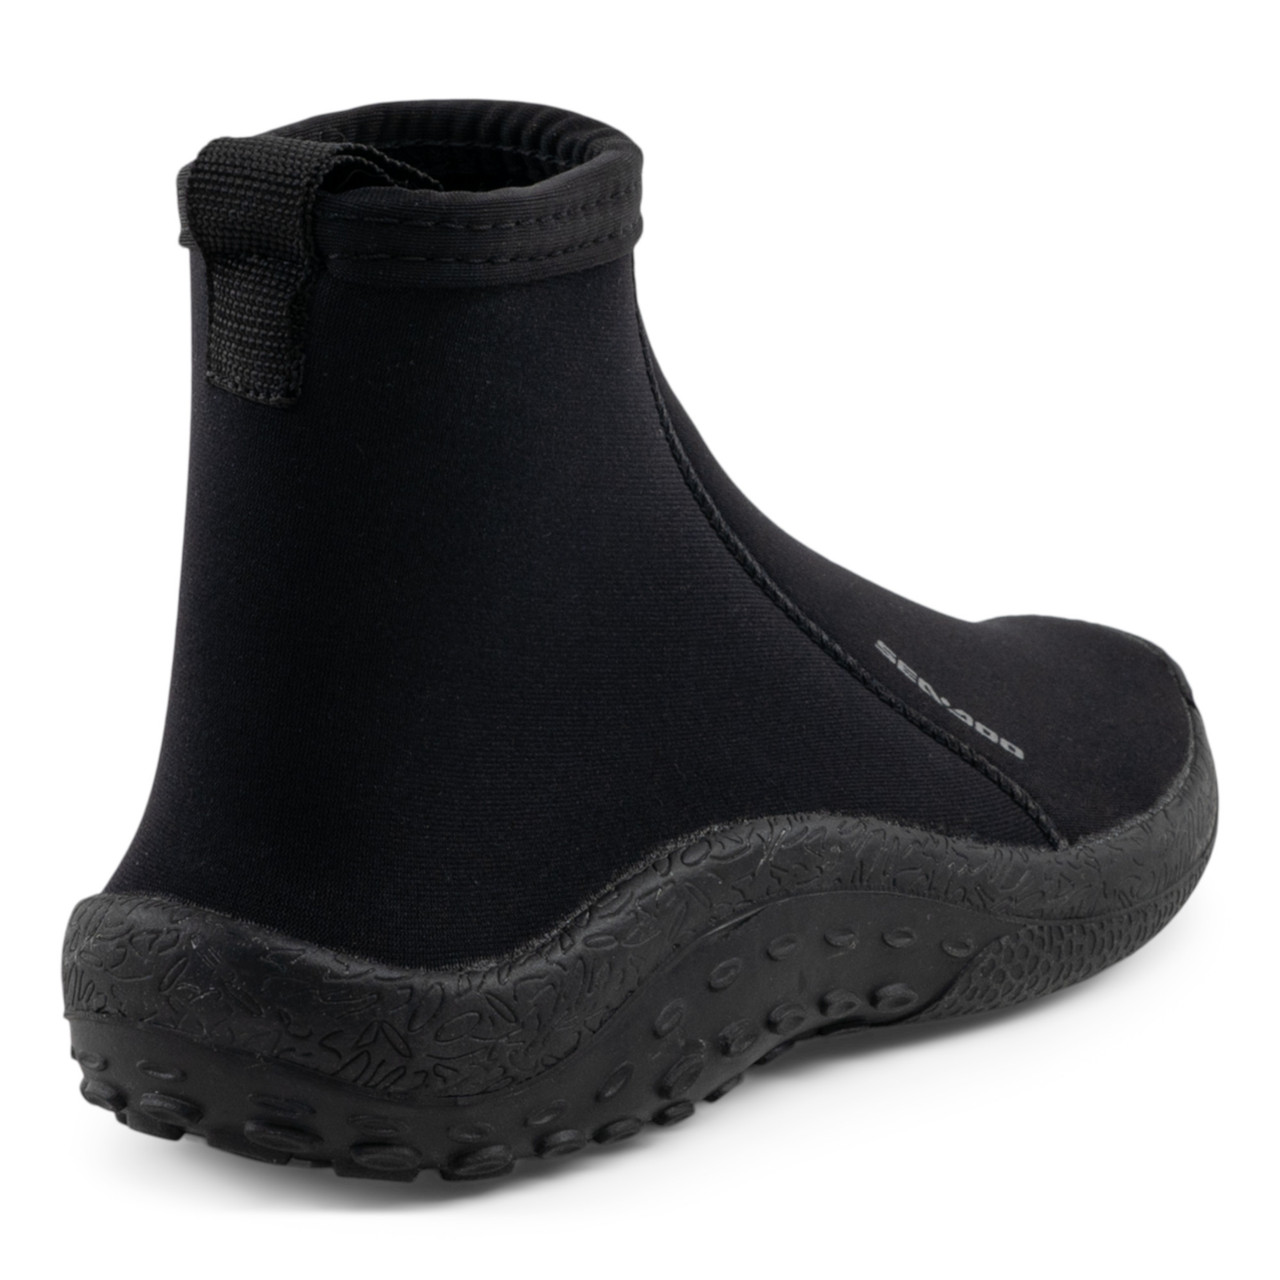 Sea-Doo New OEM, Unisex Ultra-Durable Double-glued Neoprene Shoes, 4442612790